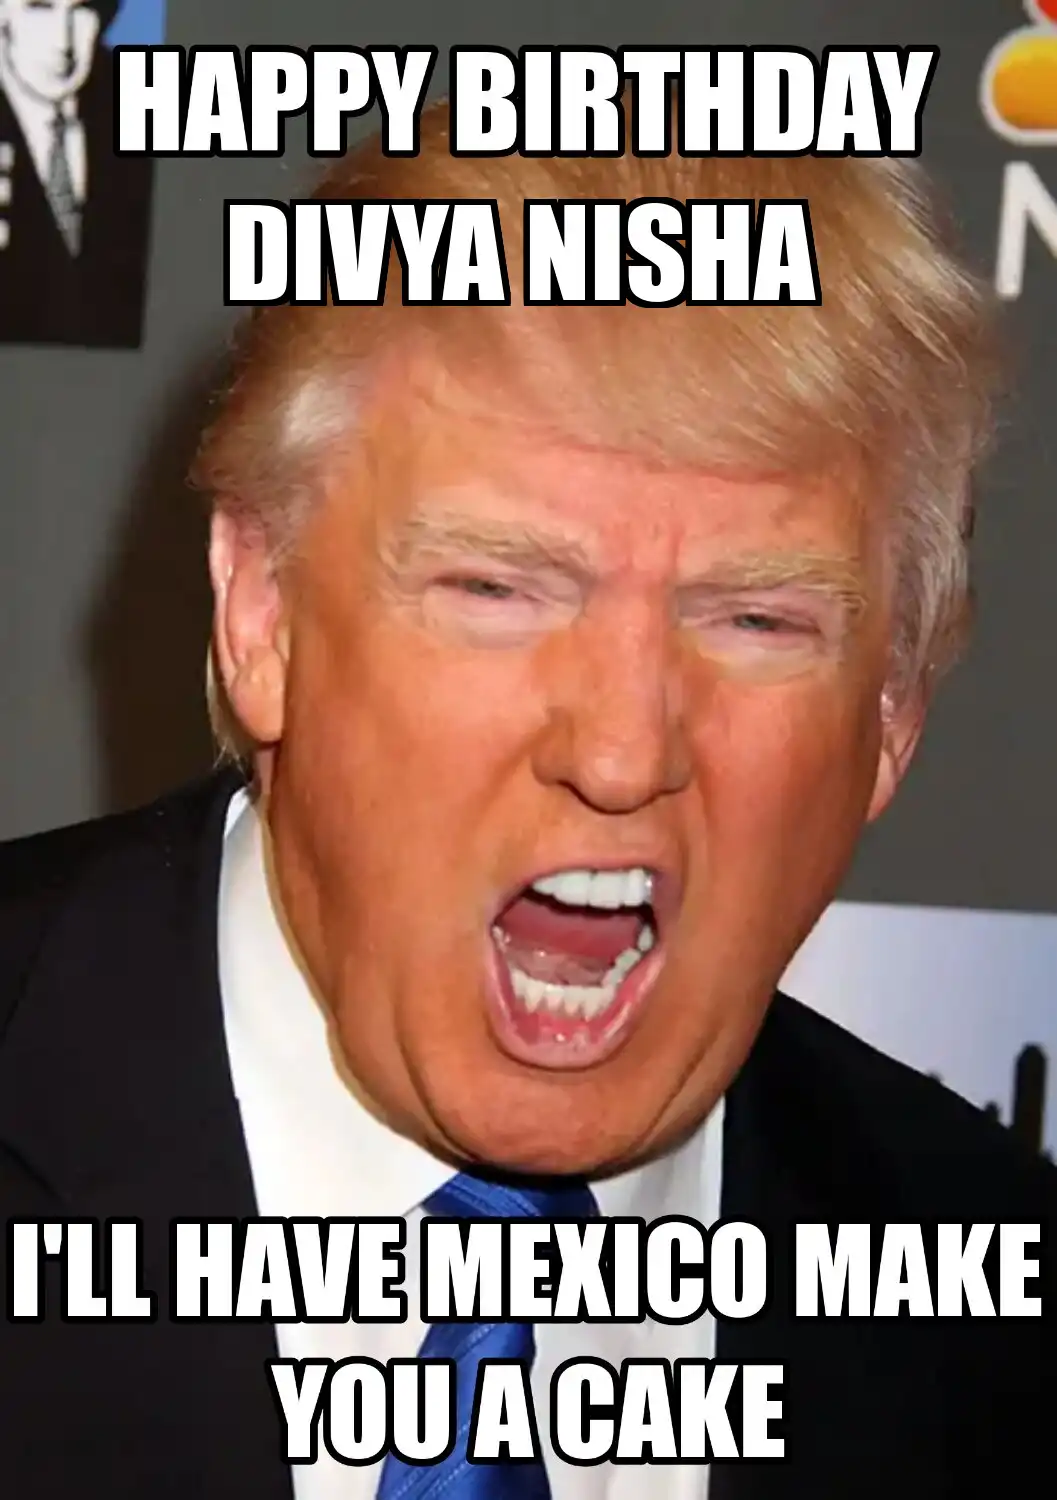 Happy Birthday Divya nisha Mexico Make You A Cake Meme